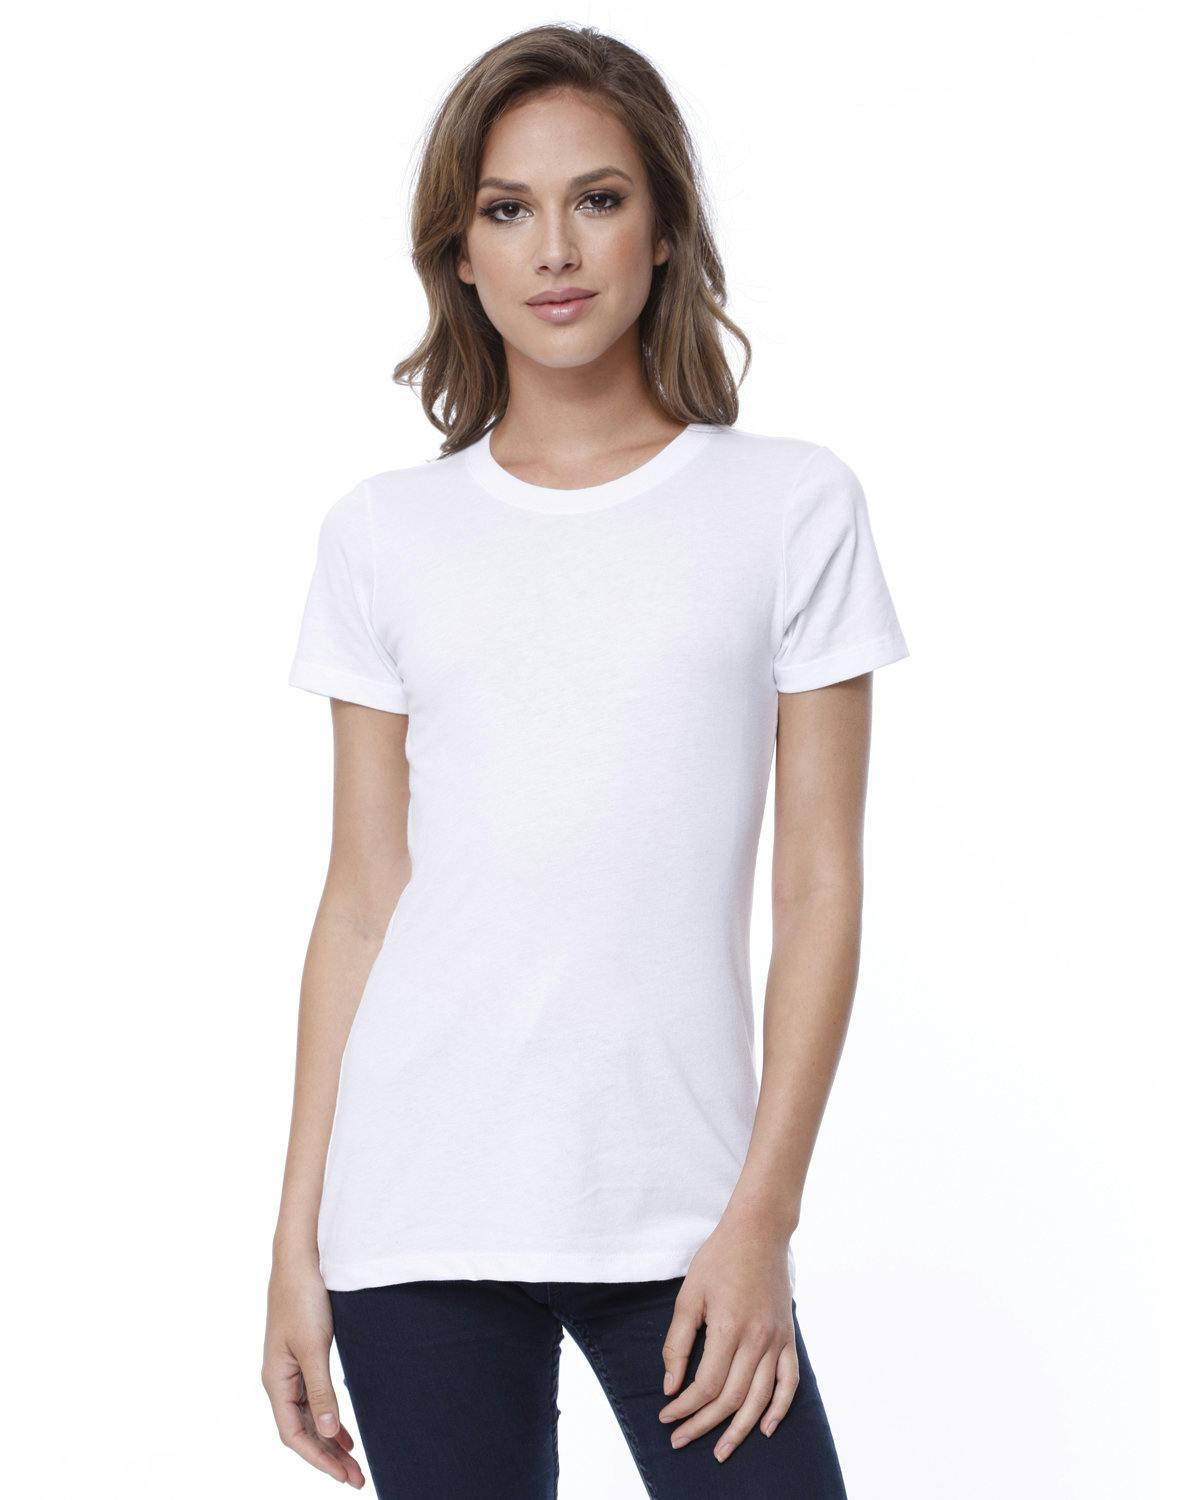 Image for Ladies' Cotton Crew Neck T-shirt